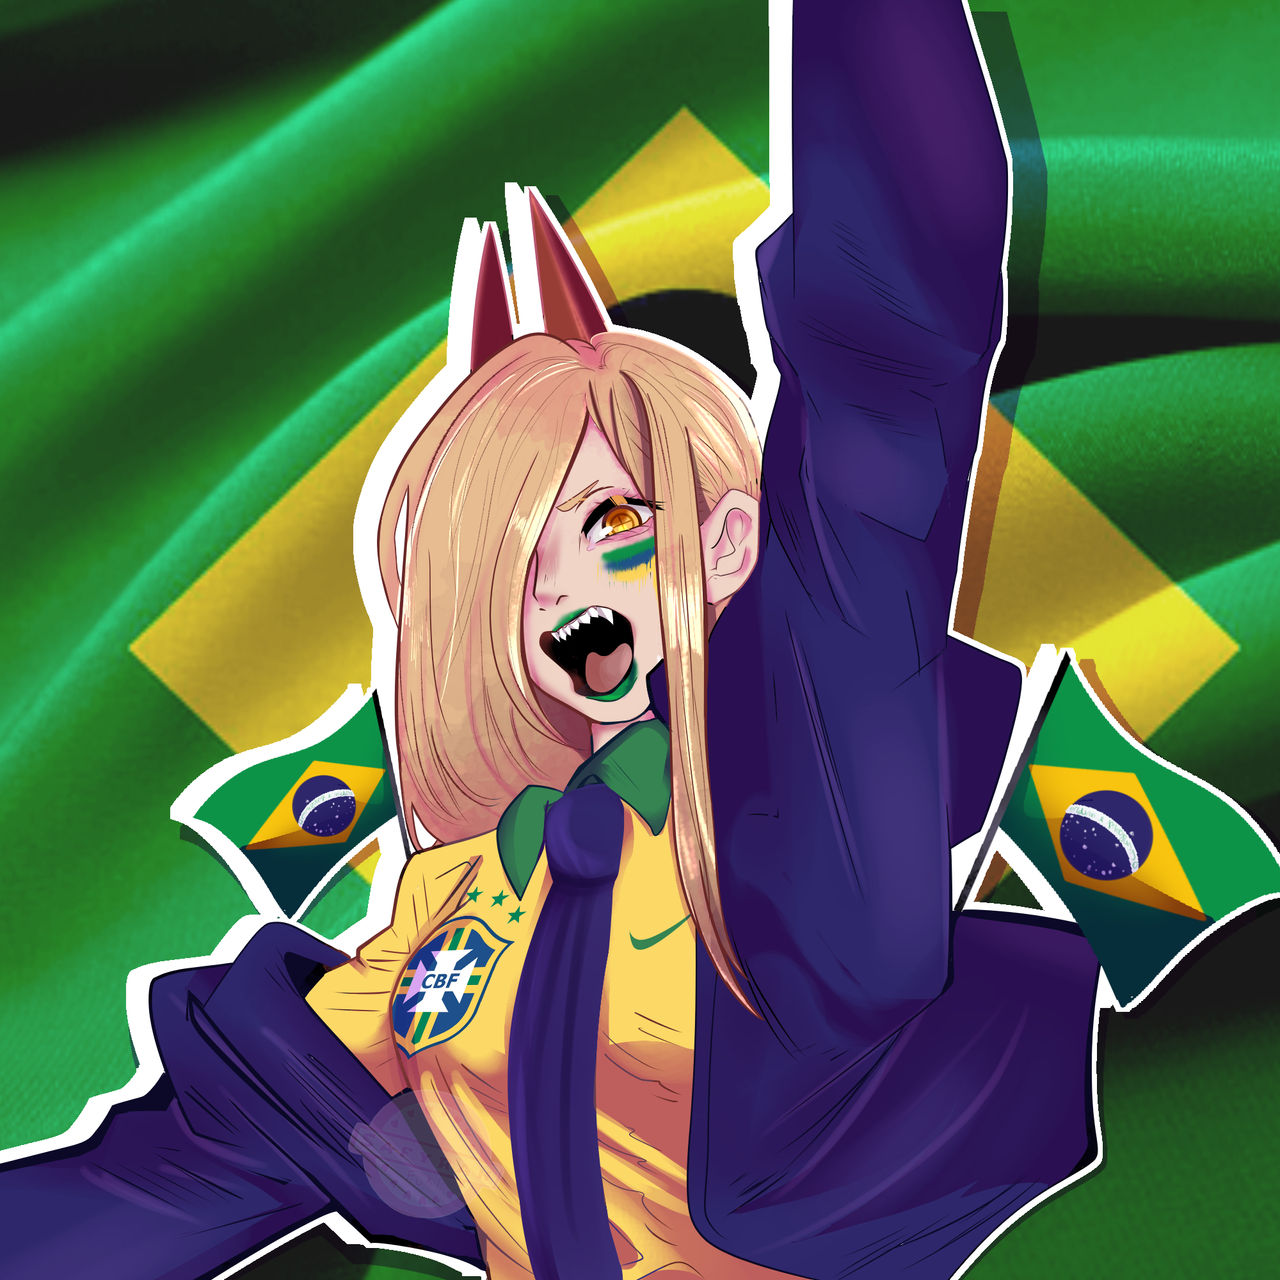 Chaisaw Man: BrazilPosting